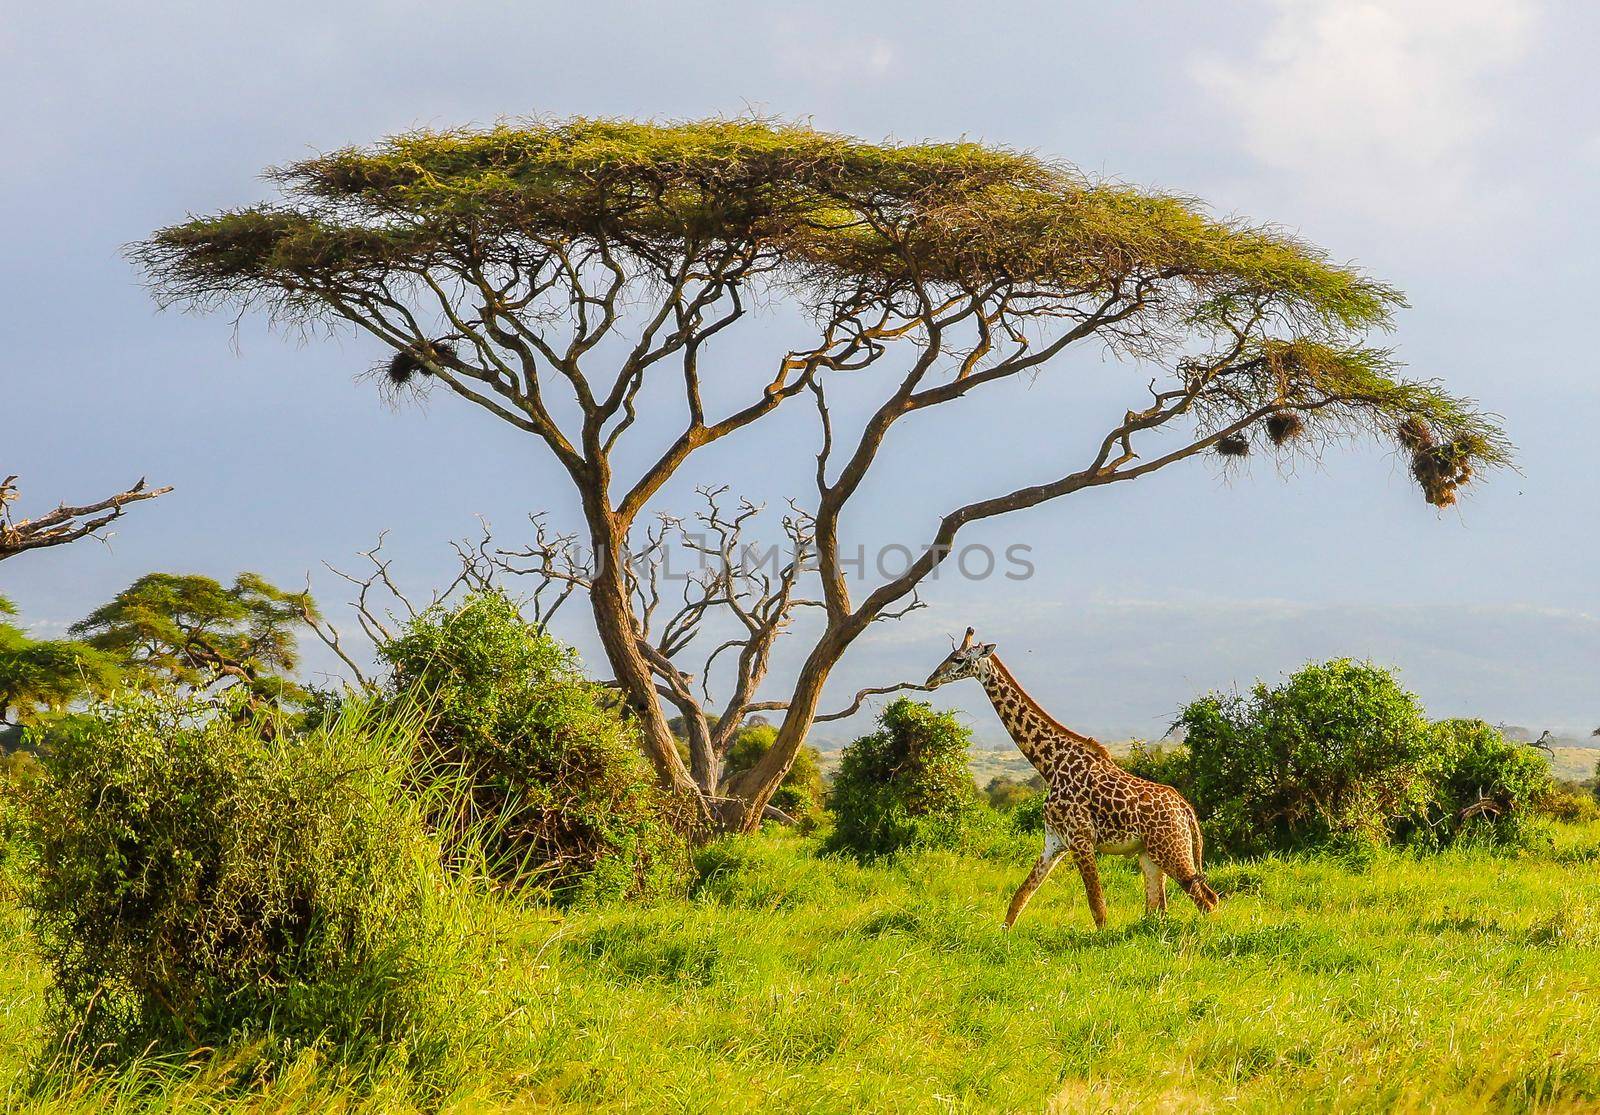 Masai Giraffe, Massai-Giraffe in Amboseli National Park, Kenya, Africa by Weltblick